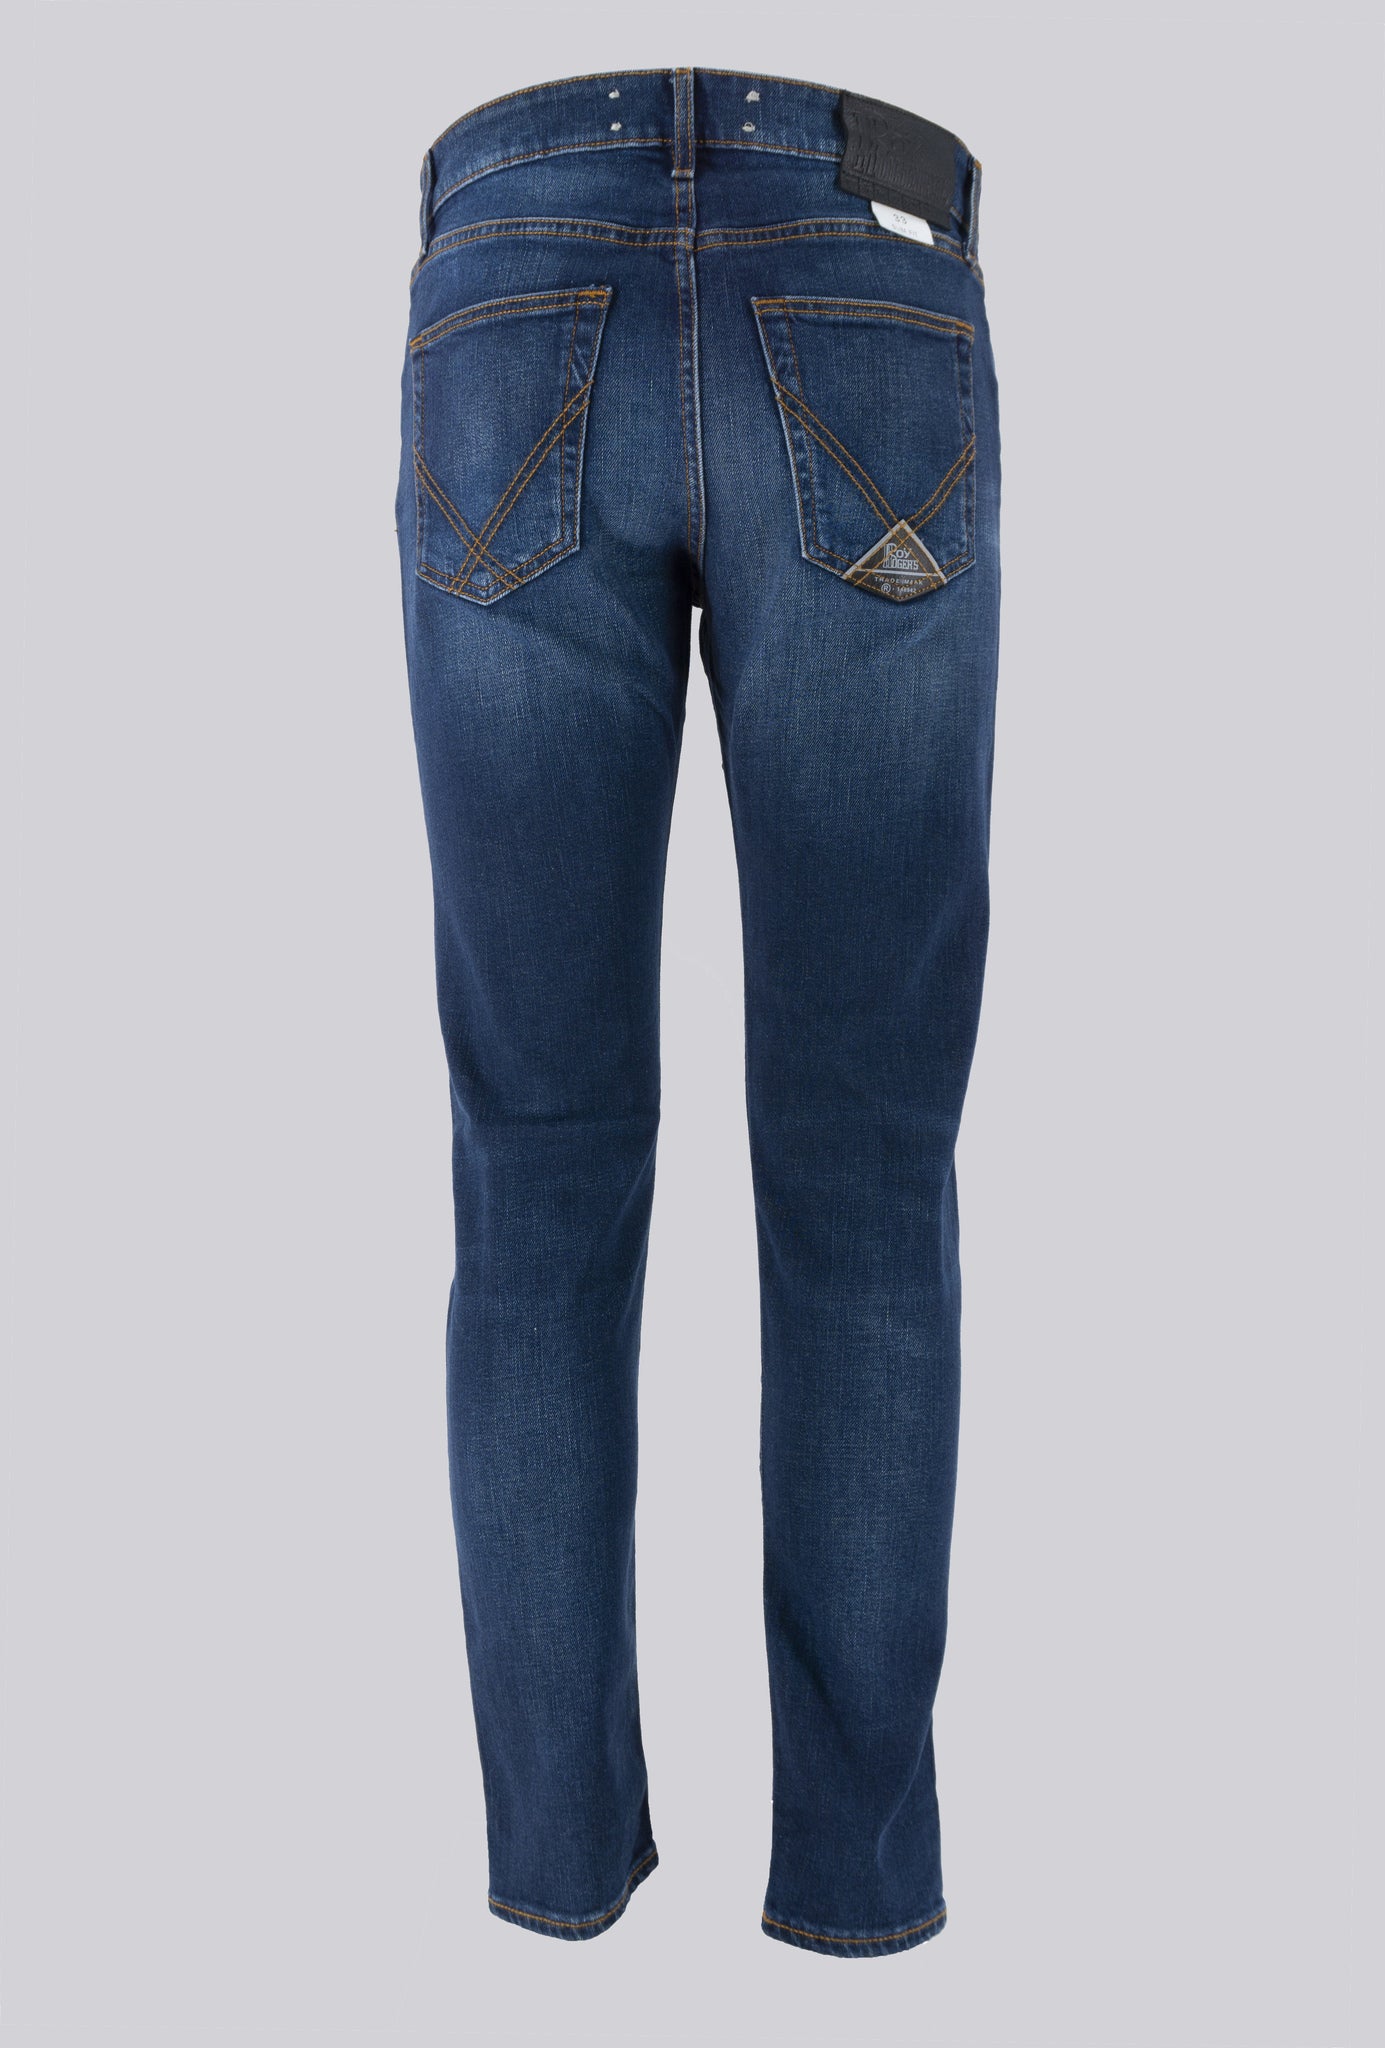 Jeans Lavaggio Medio Nozeleg / Jeans - Ideal Moda